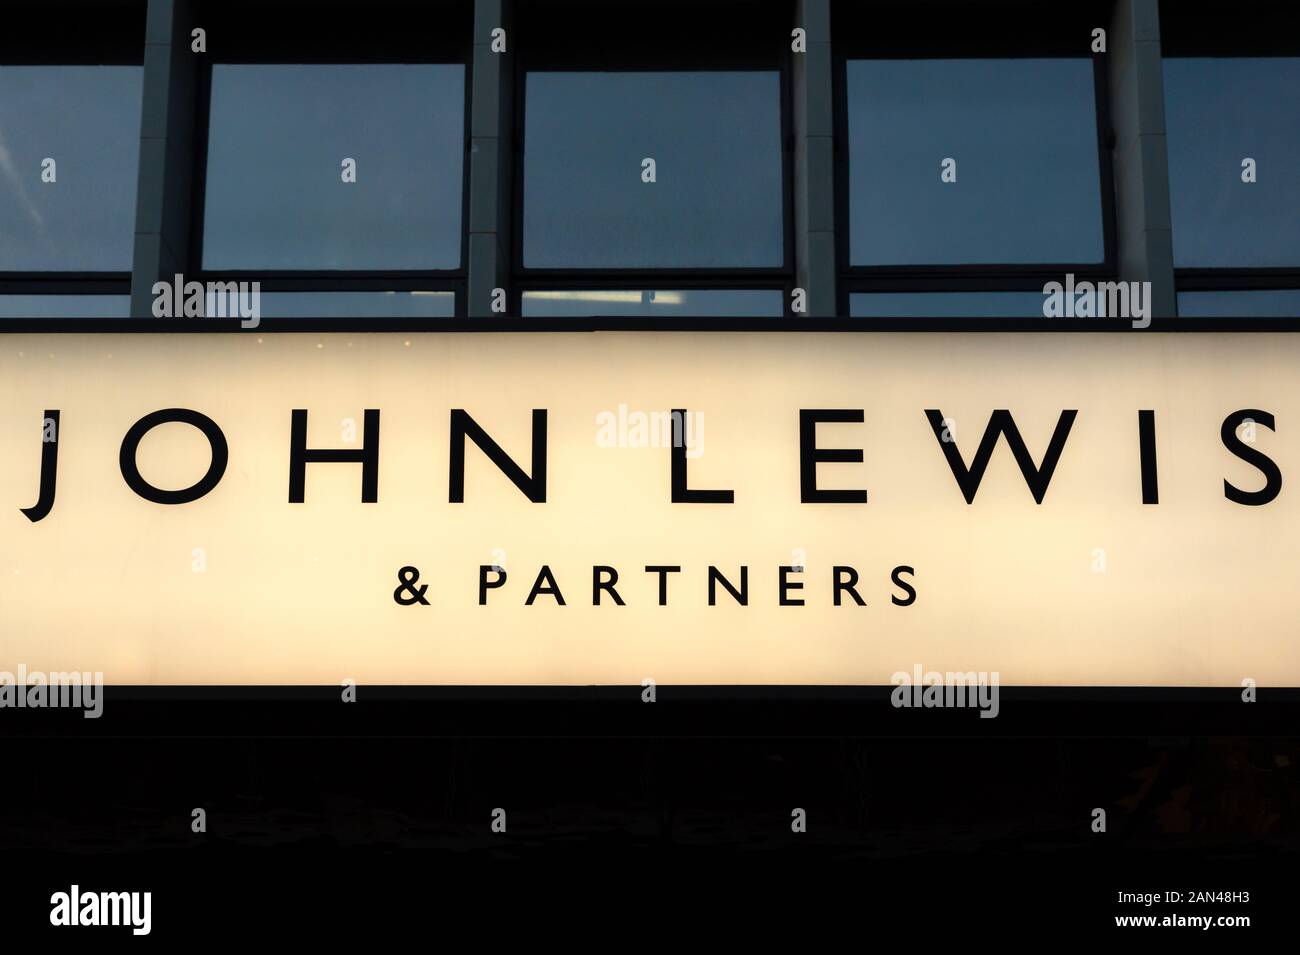 John Lewis & Partners logo wall, Oxford Street, London, UK Stock Photo